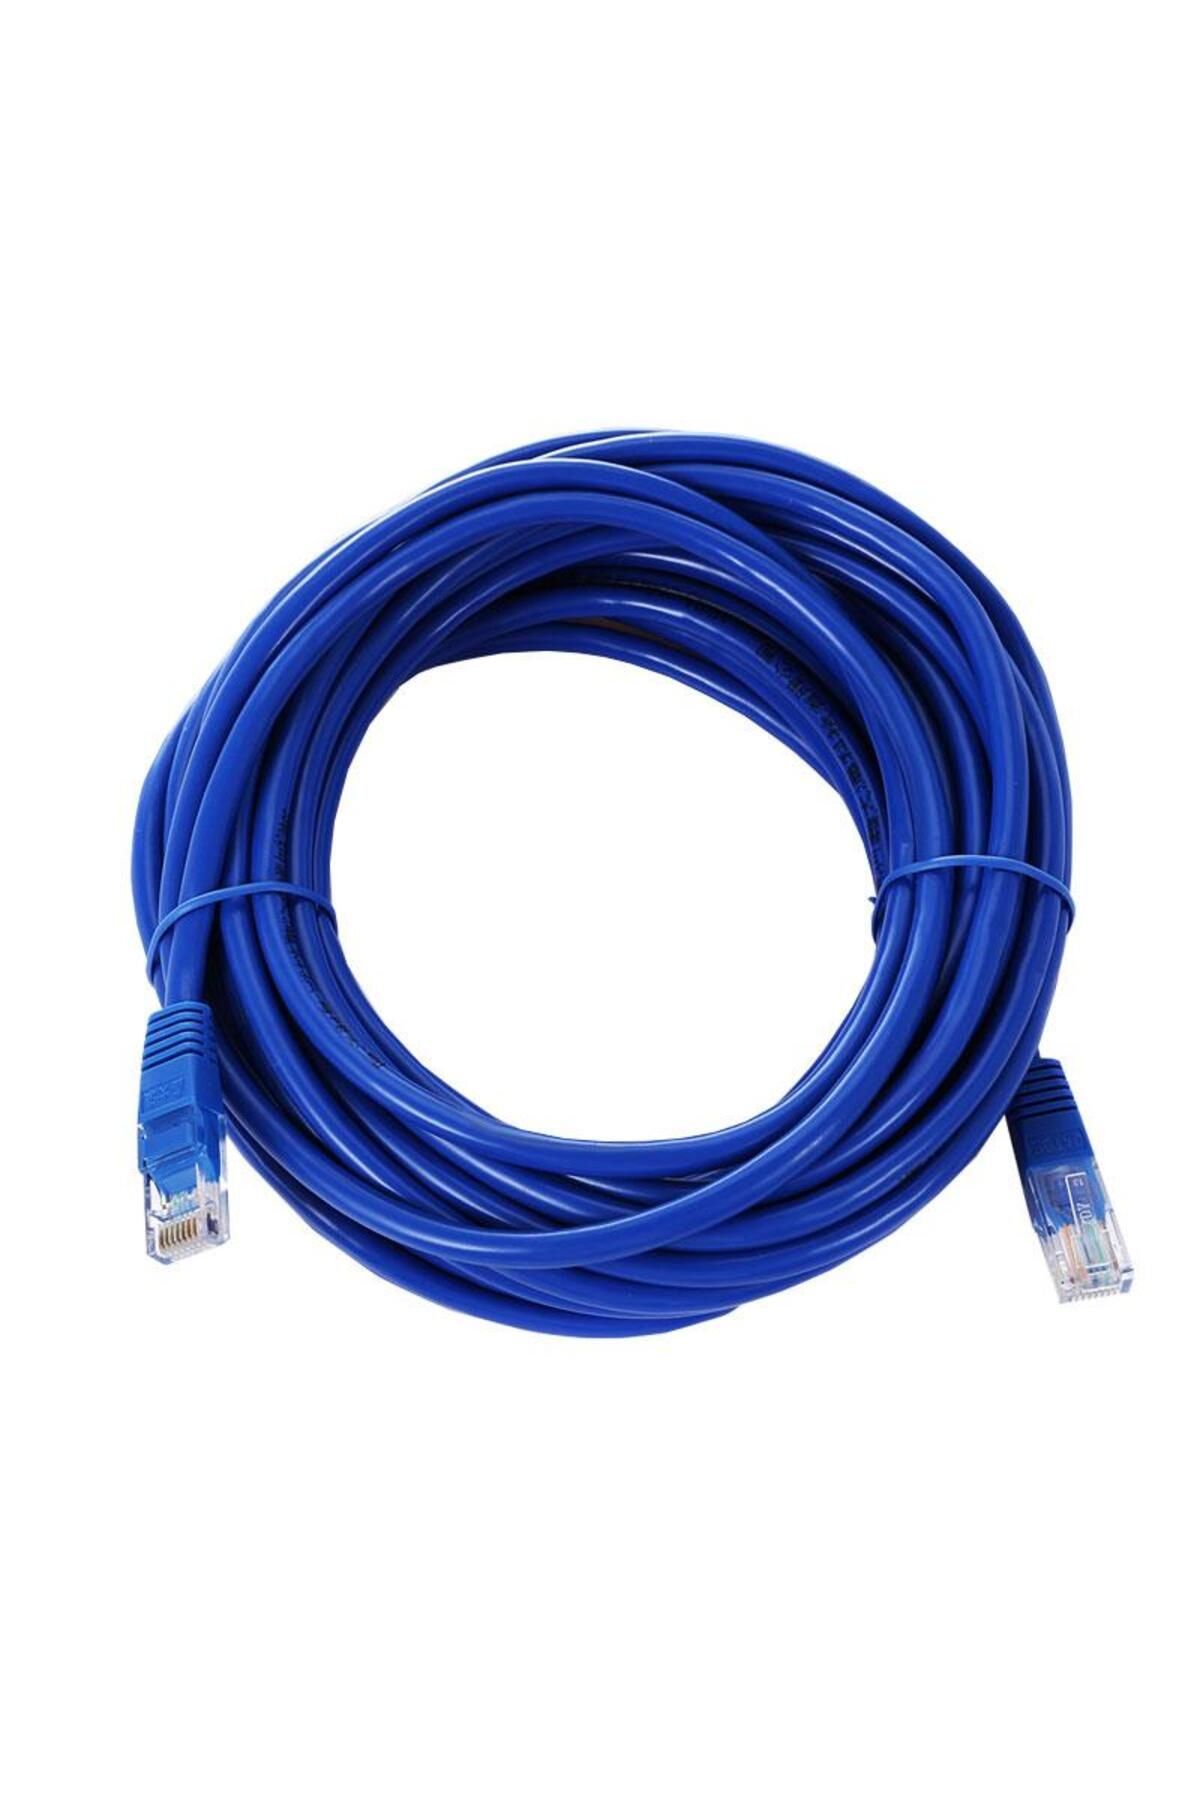 KEEPRO İnternet Bağlantı Kablosu Cat6 Rj 45 Ethernet Kablosu 10m Mavi